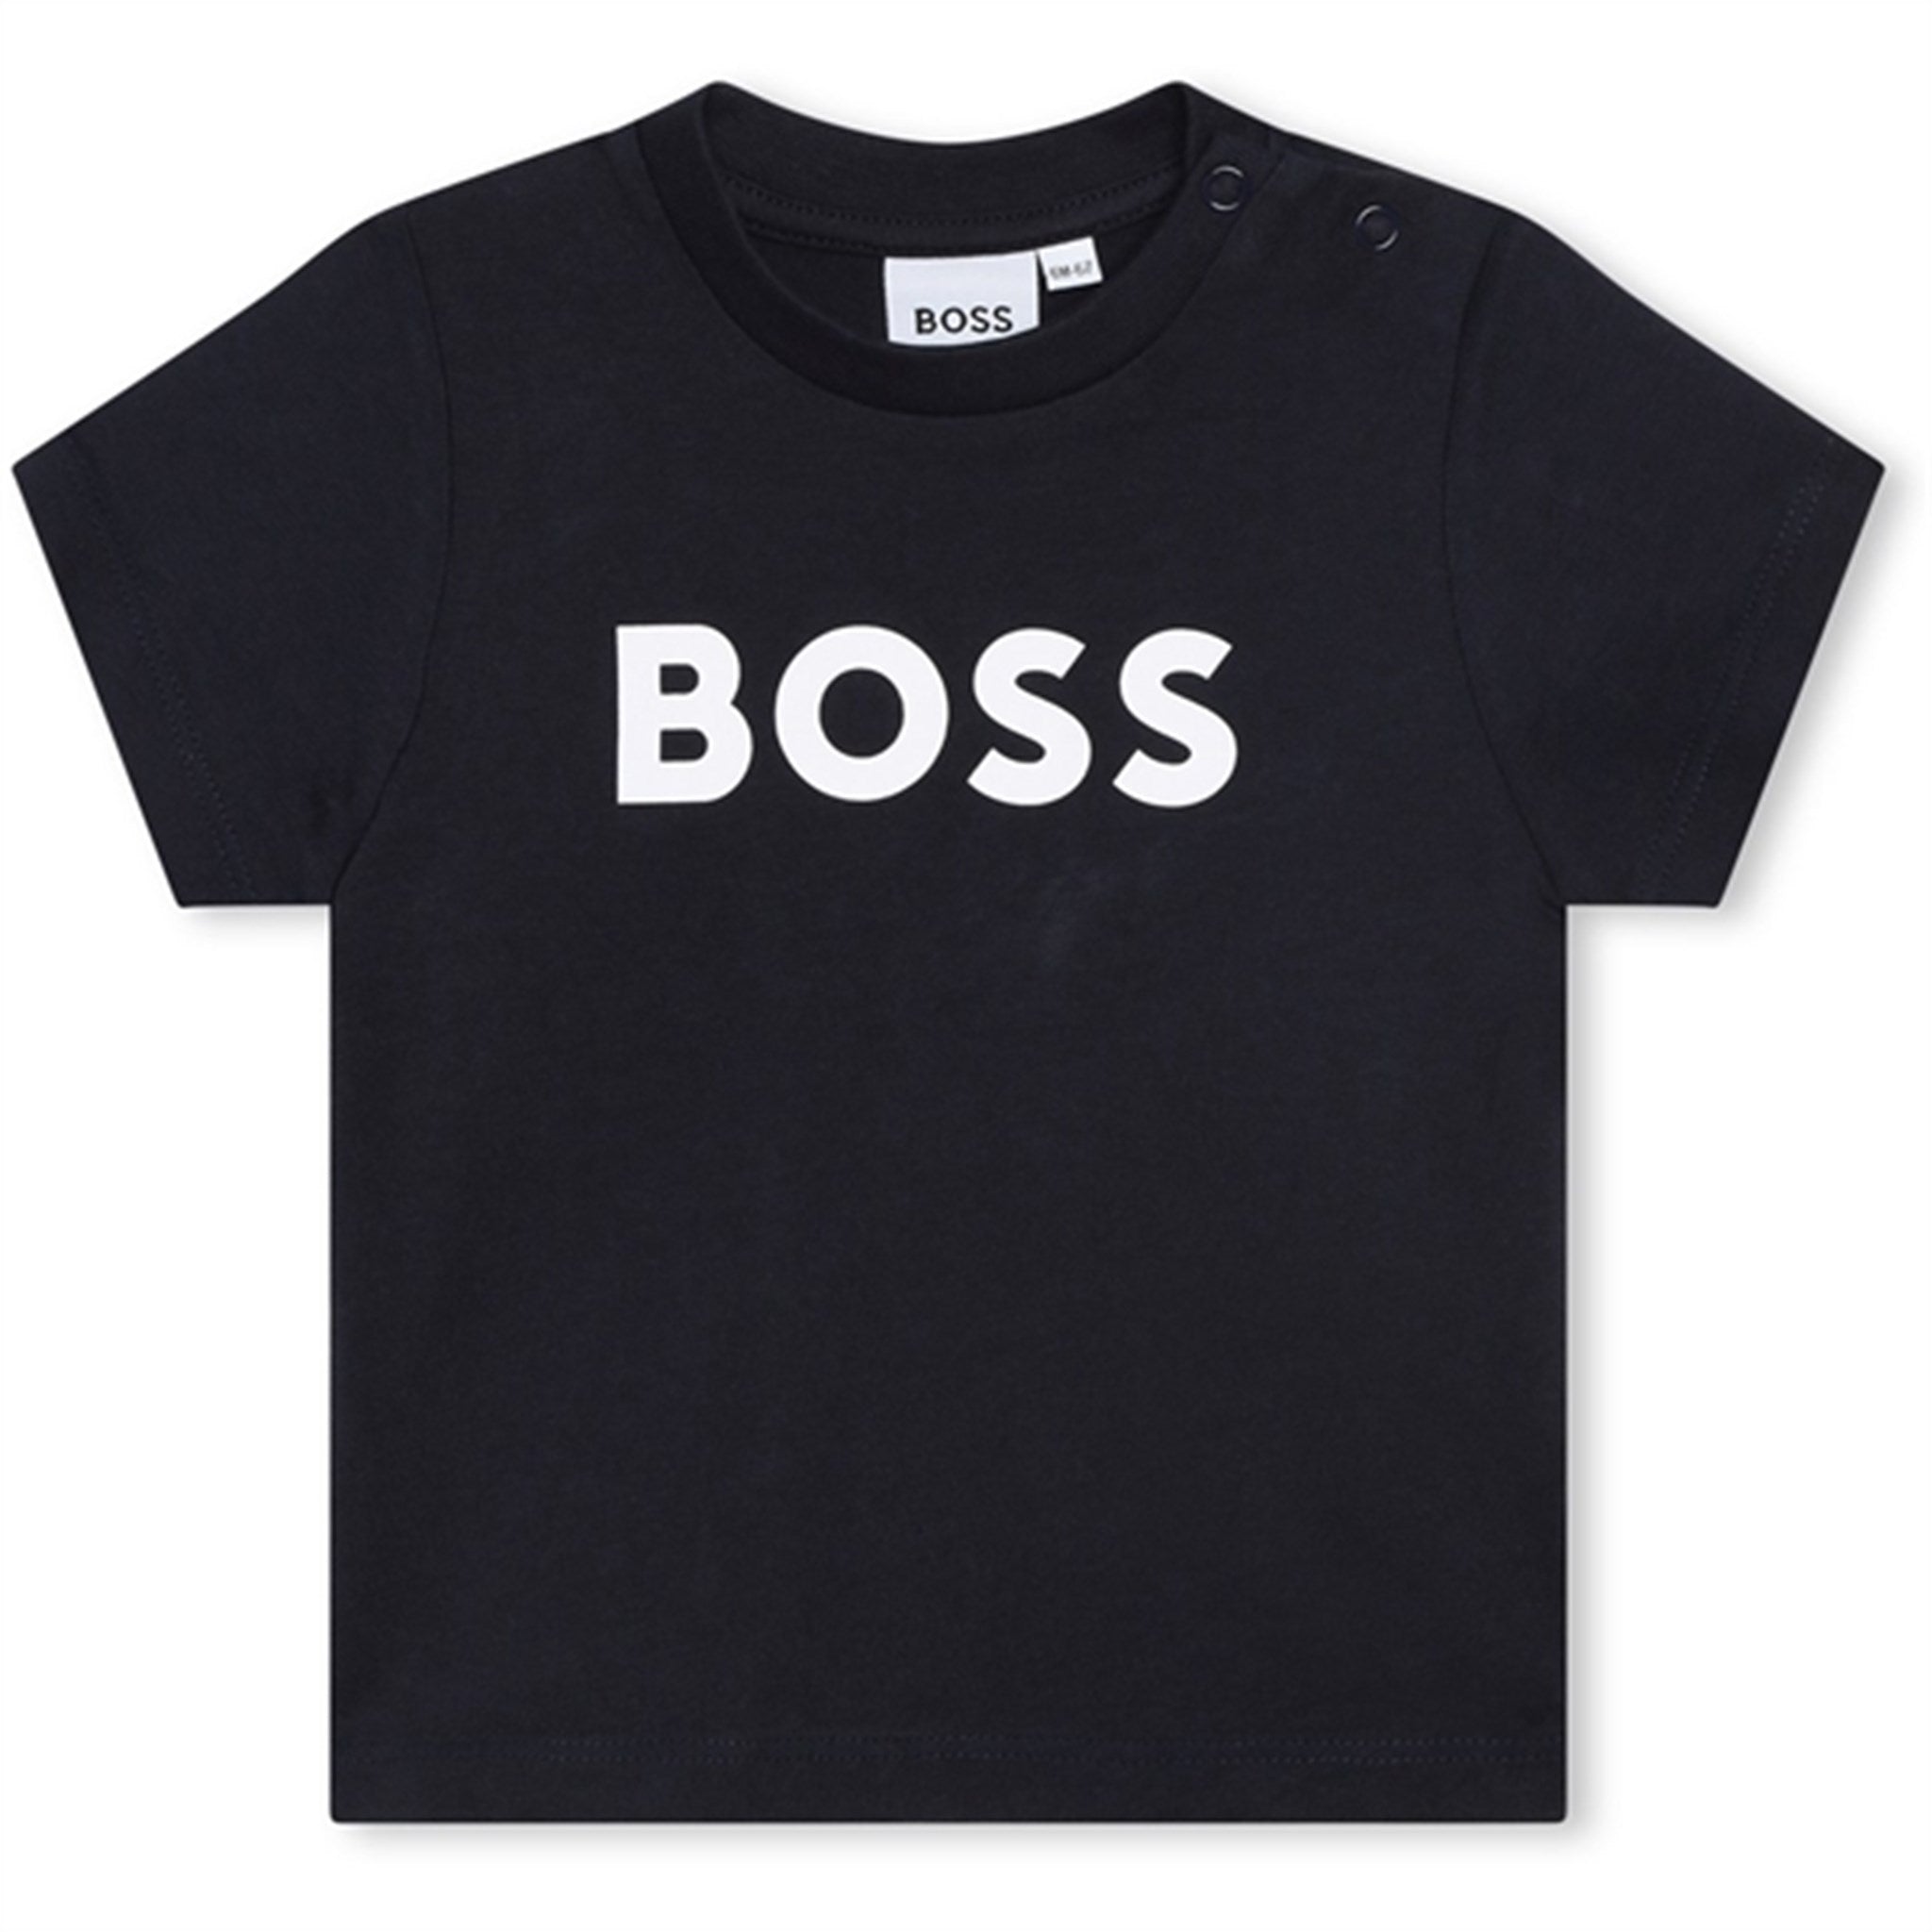 Hugo Boss Bebis T-shirt Navy